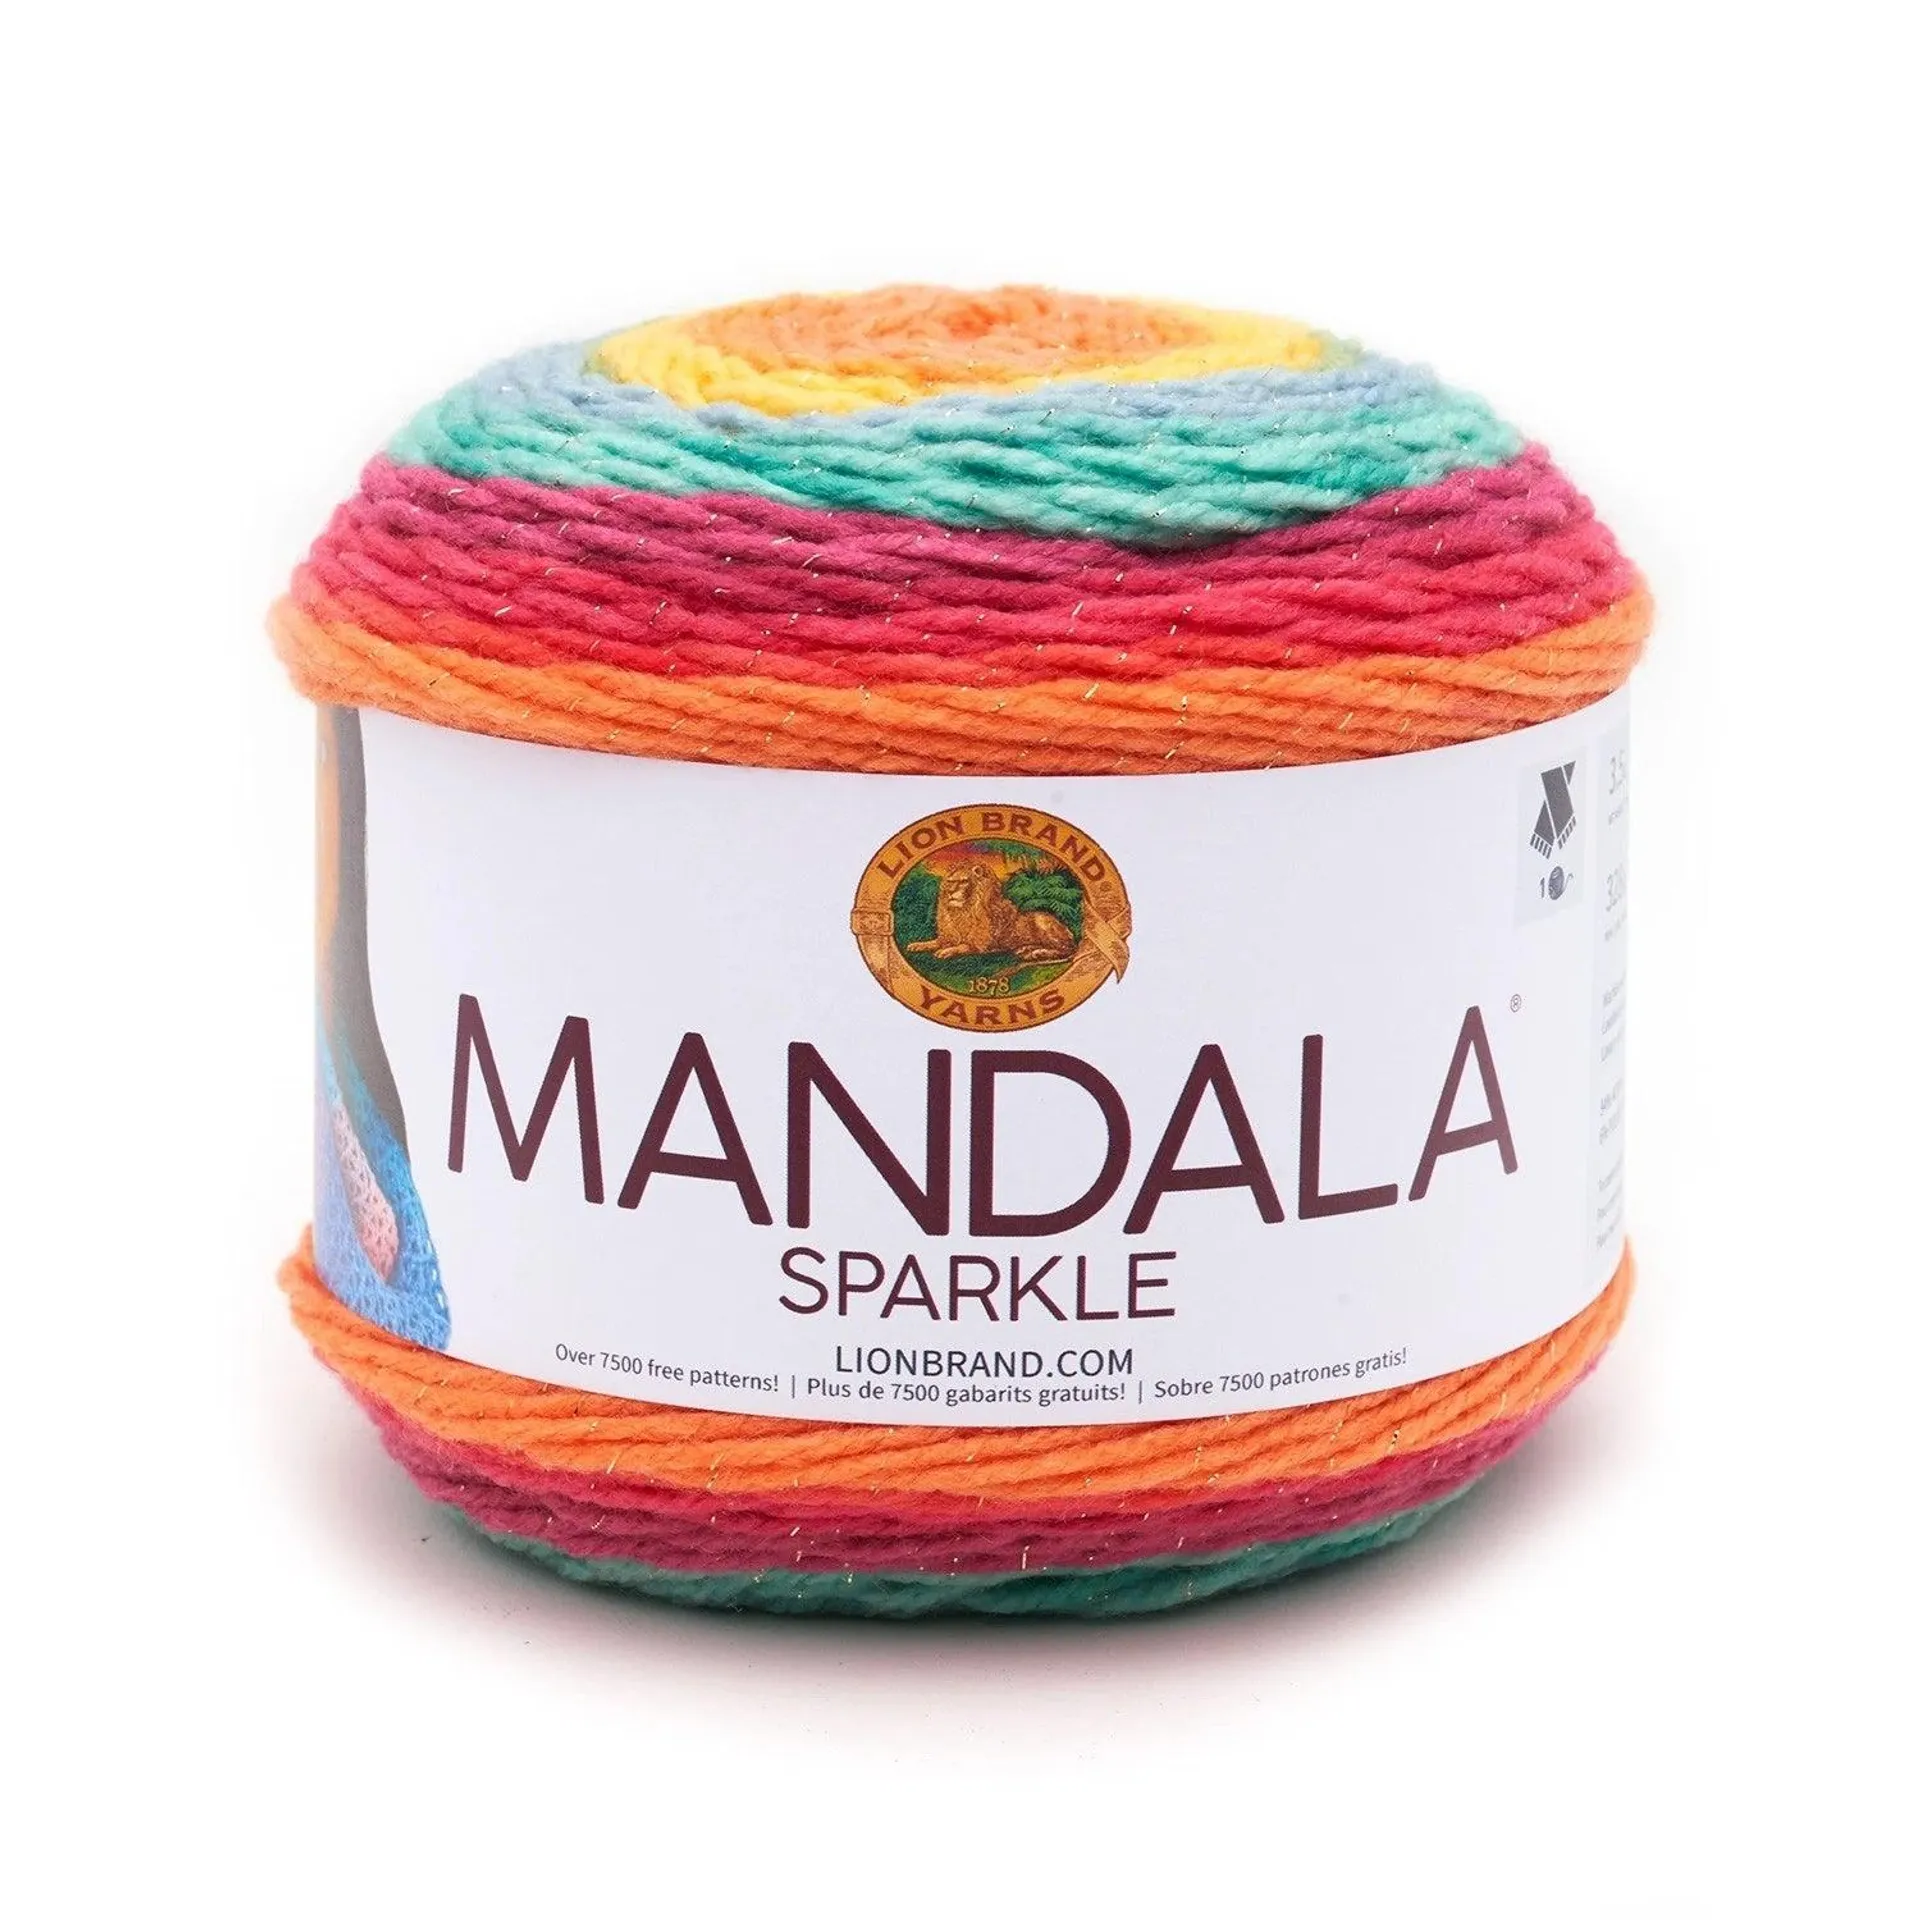 Mandala Sparkle - 100g - Lion Brand